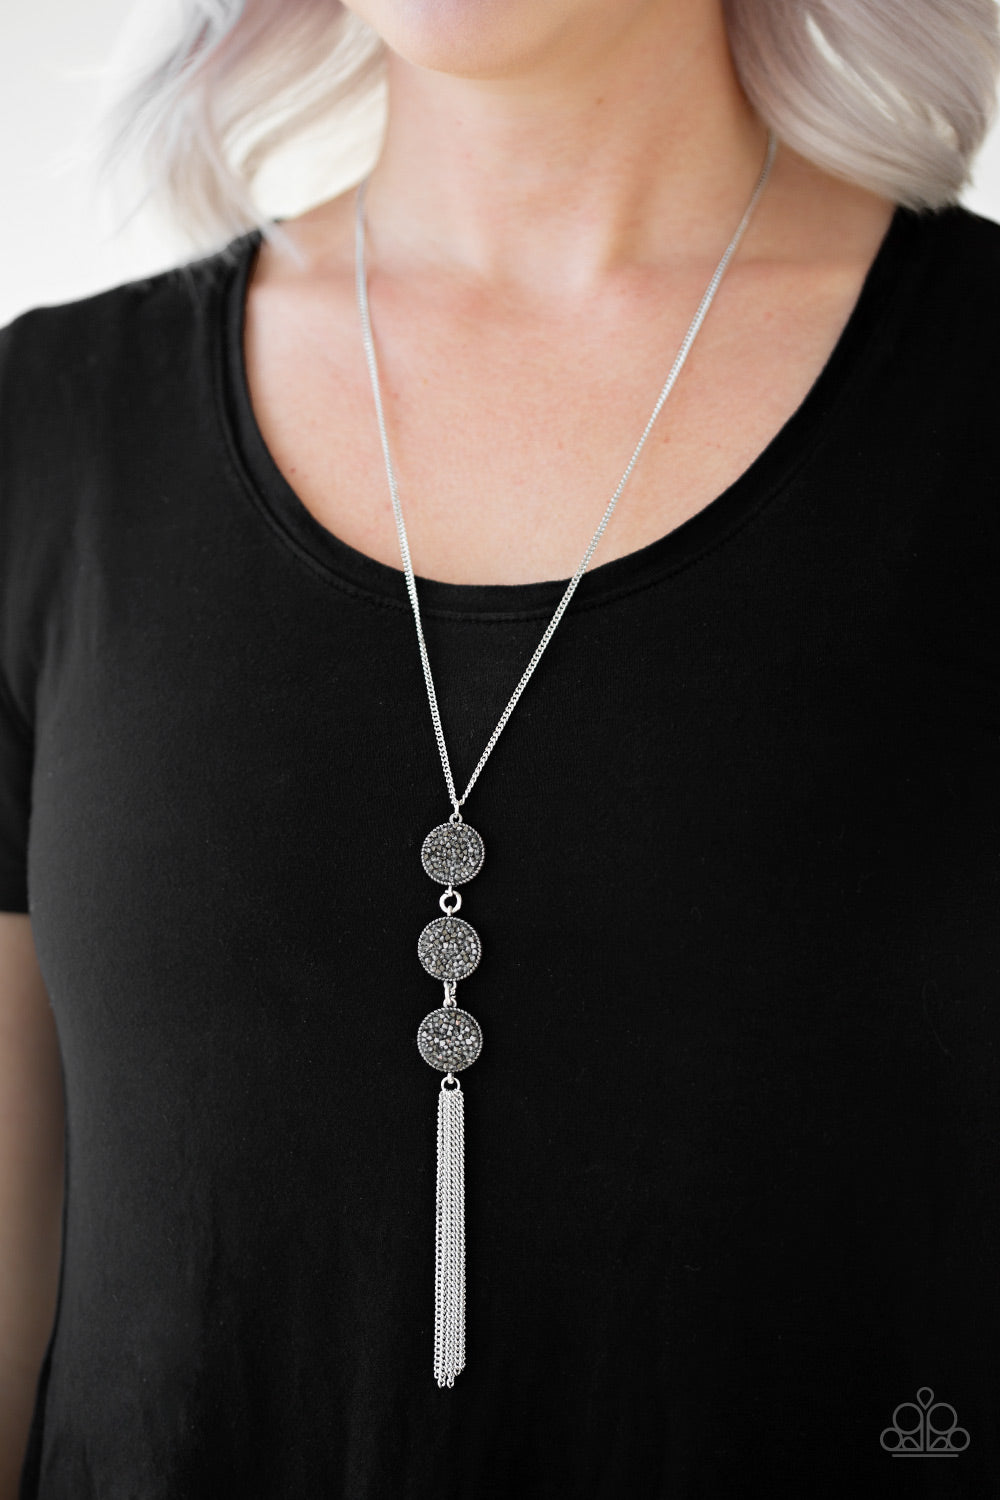 Triple Shimmer Silver
Necklace - Daria's Blings N Things